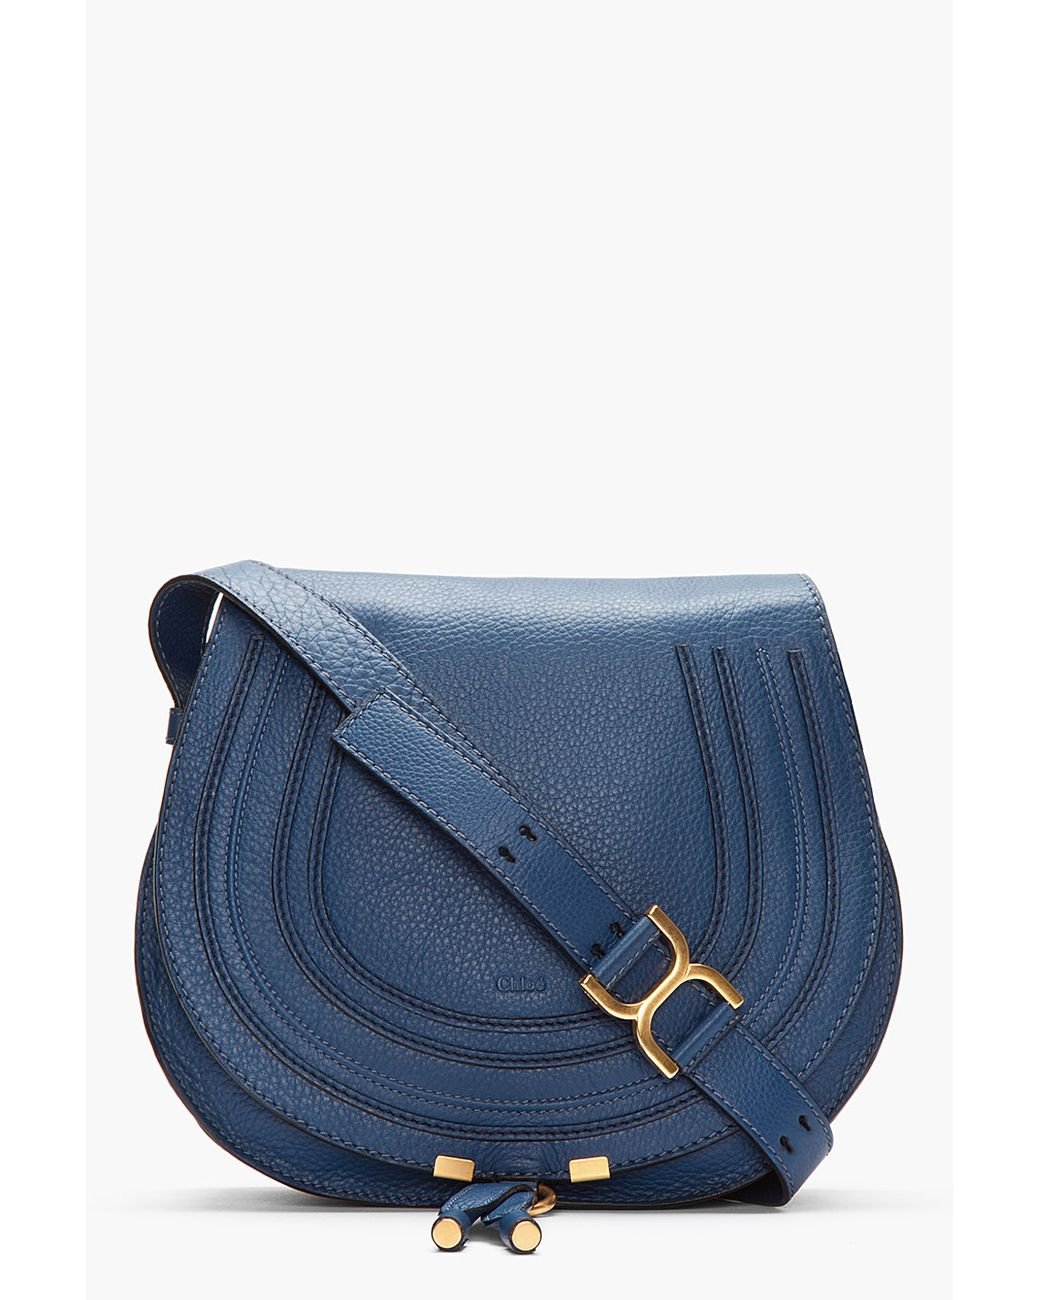 Chloé Medium Royal Navy Leather Marcie Shoulder Bag in Blue | Lyst